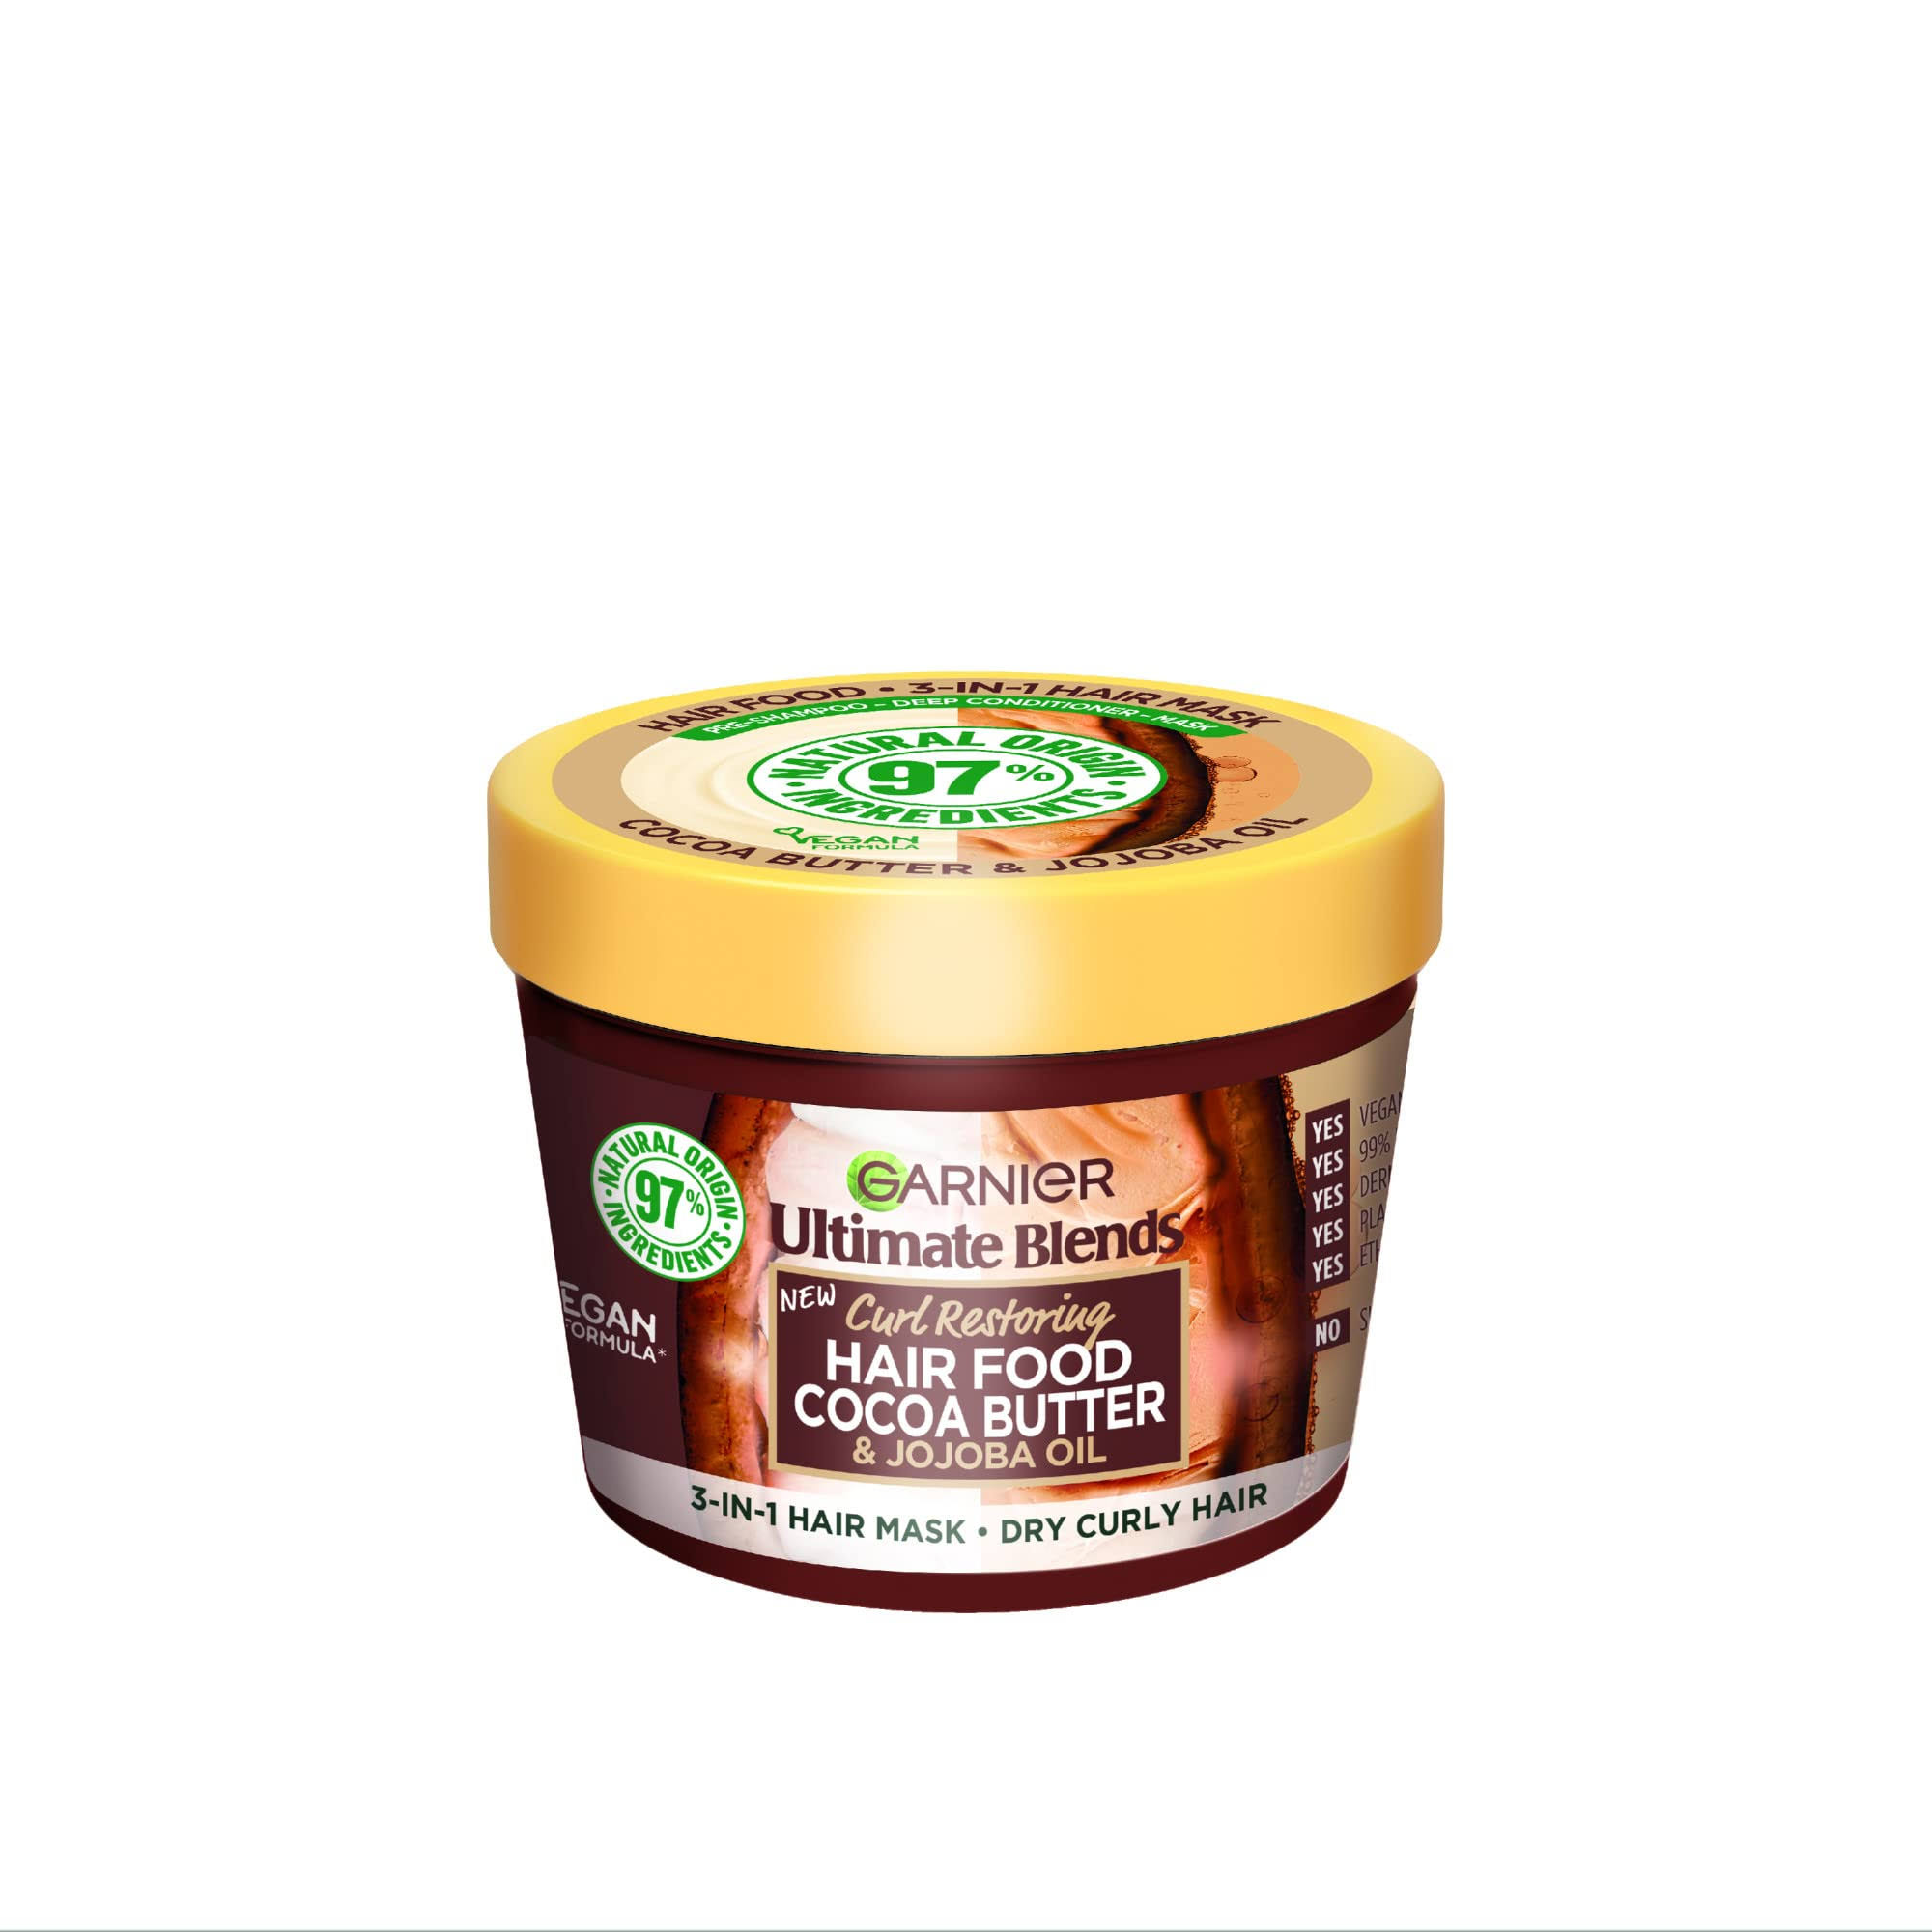 Garnier Ultimate Blends Hair Food Cocoa Butter Hair Mask